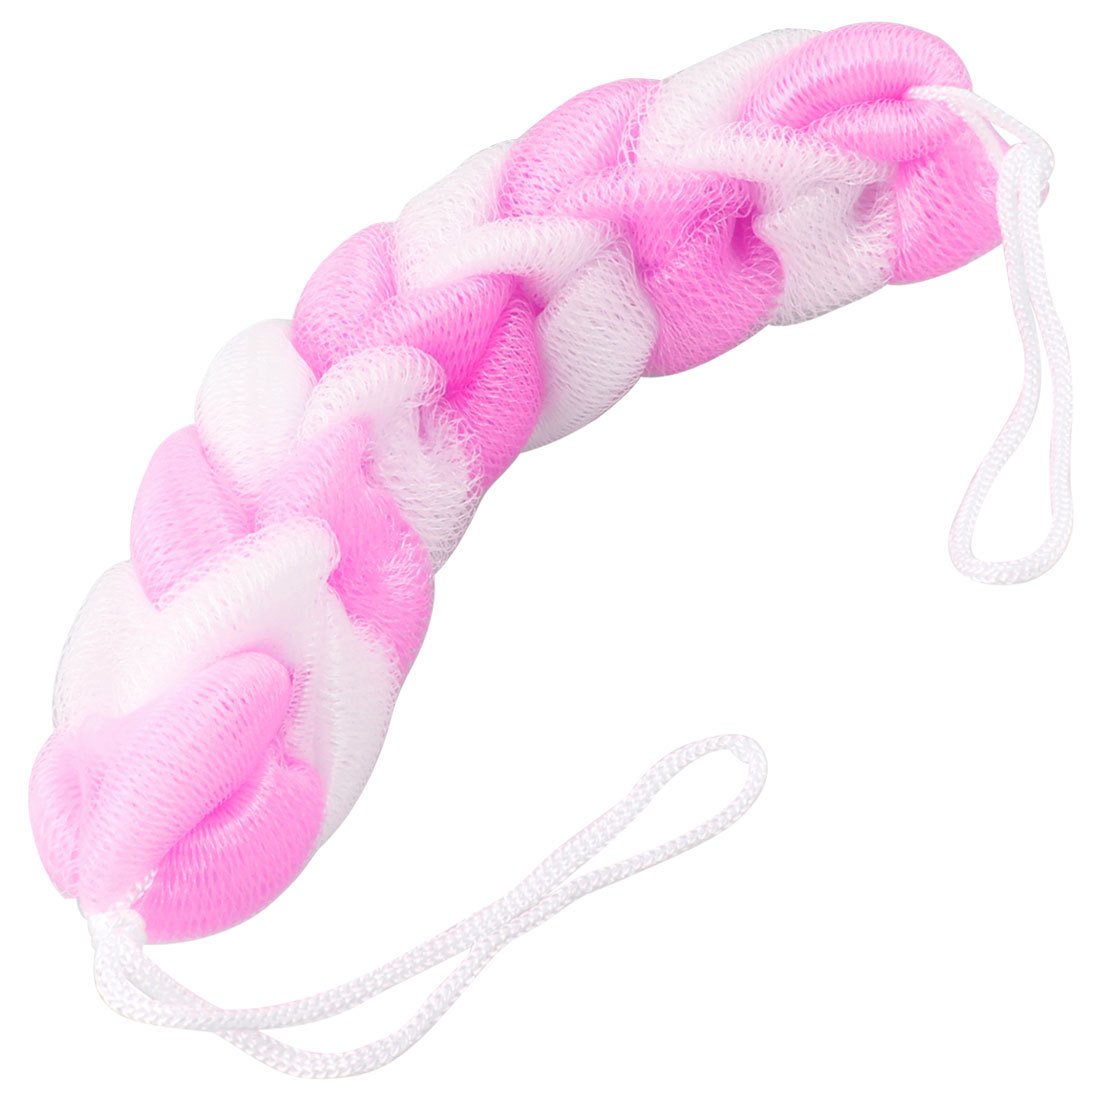 MayaBeauty Braided Mesh Back Strap Massage Sponge with Rope Handles - Pink